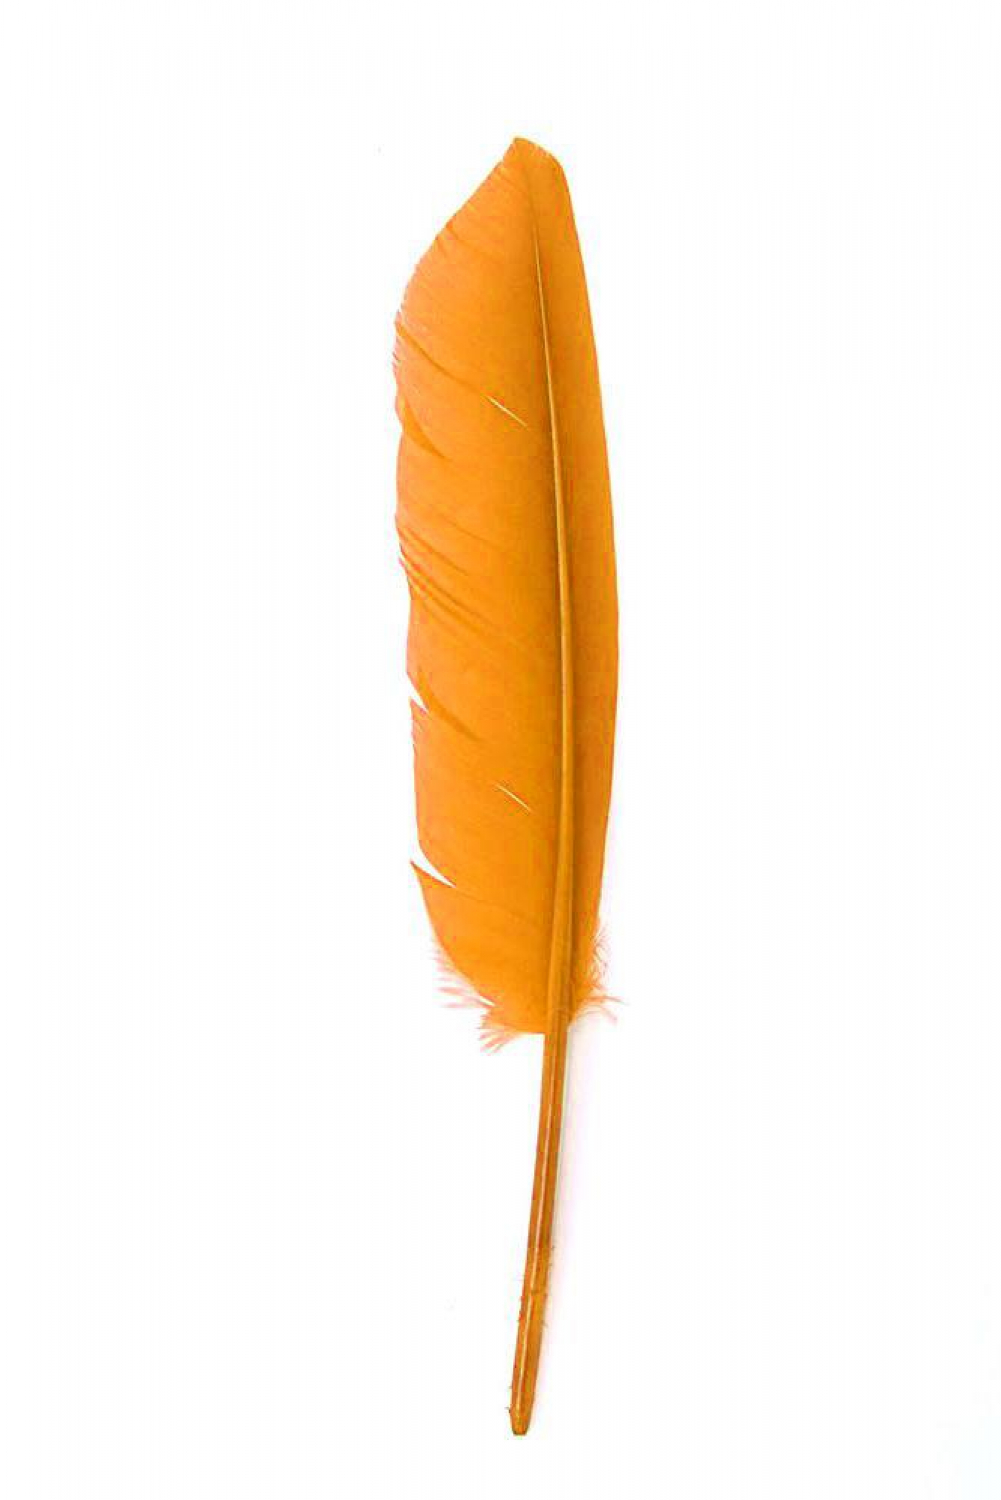 Gänsefeder 22-27cm, orange, links, 10er Pack